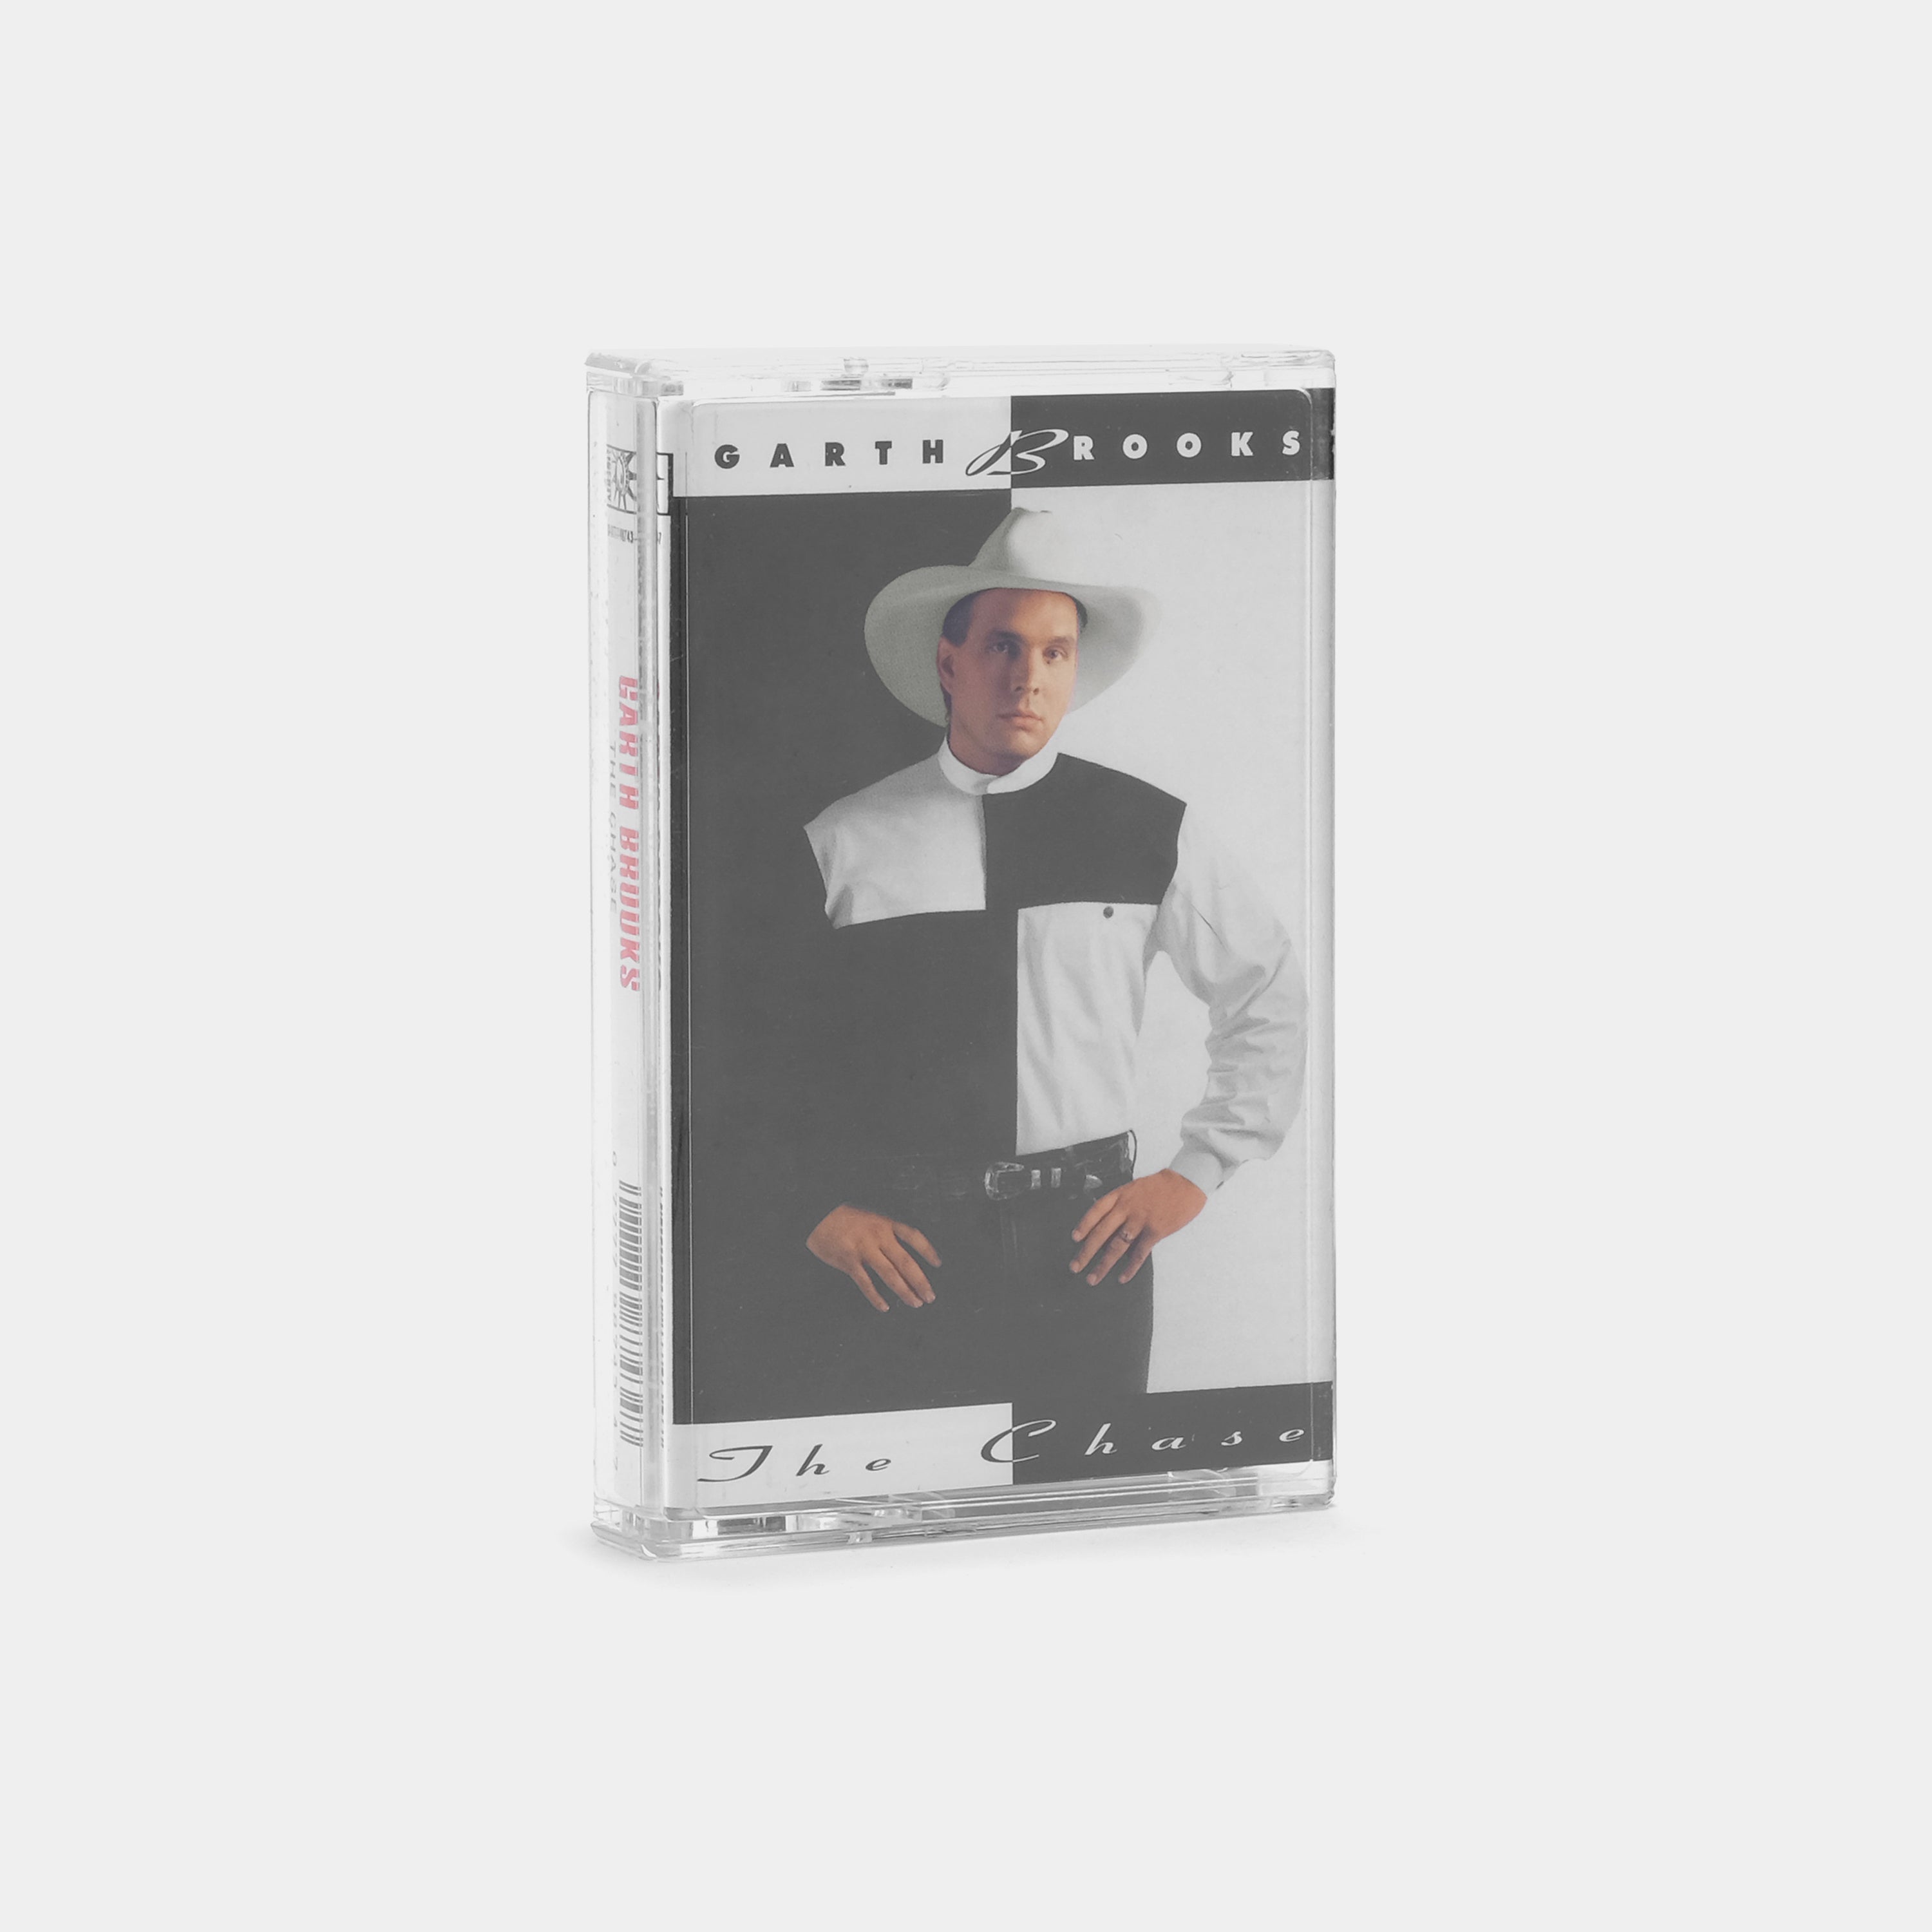 Garth Brooks - The Chase Cassette Tape